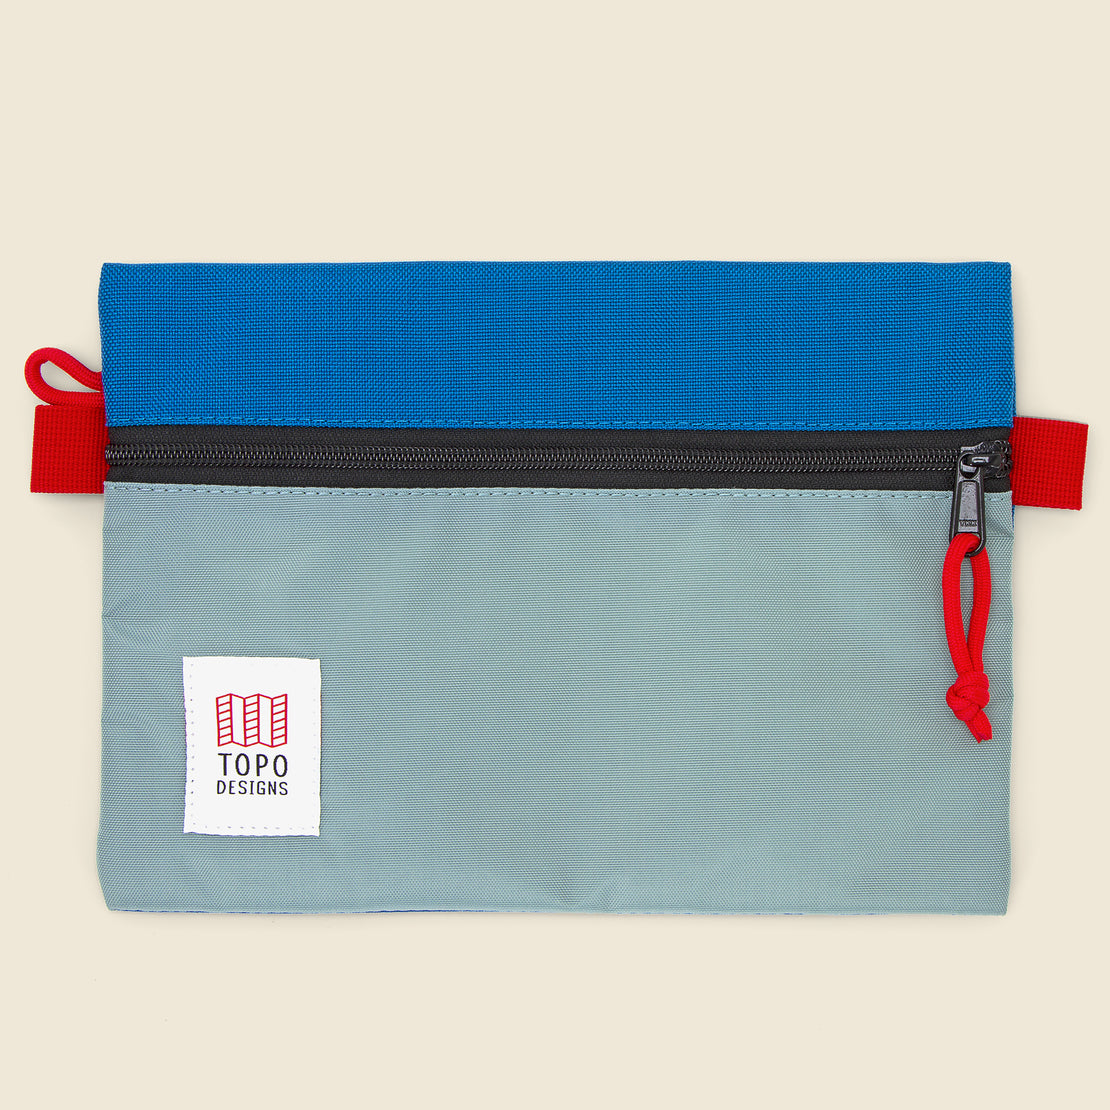 Topo Designs Medium Accessory Bag - Mineral Blue/Blue